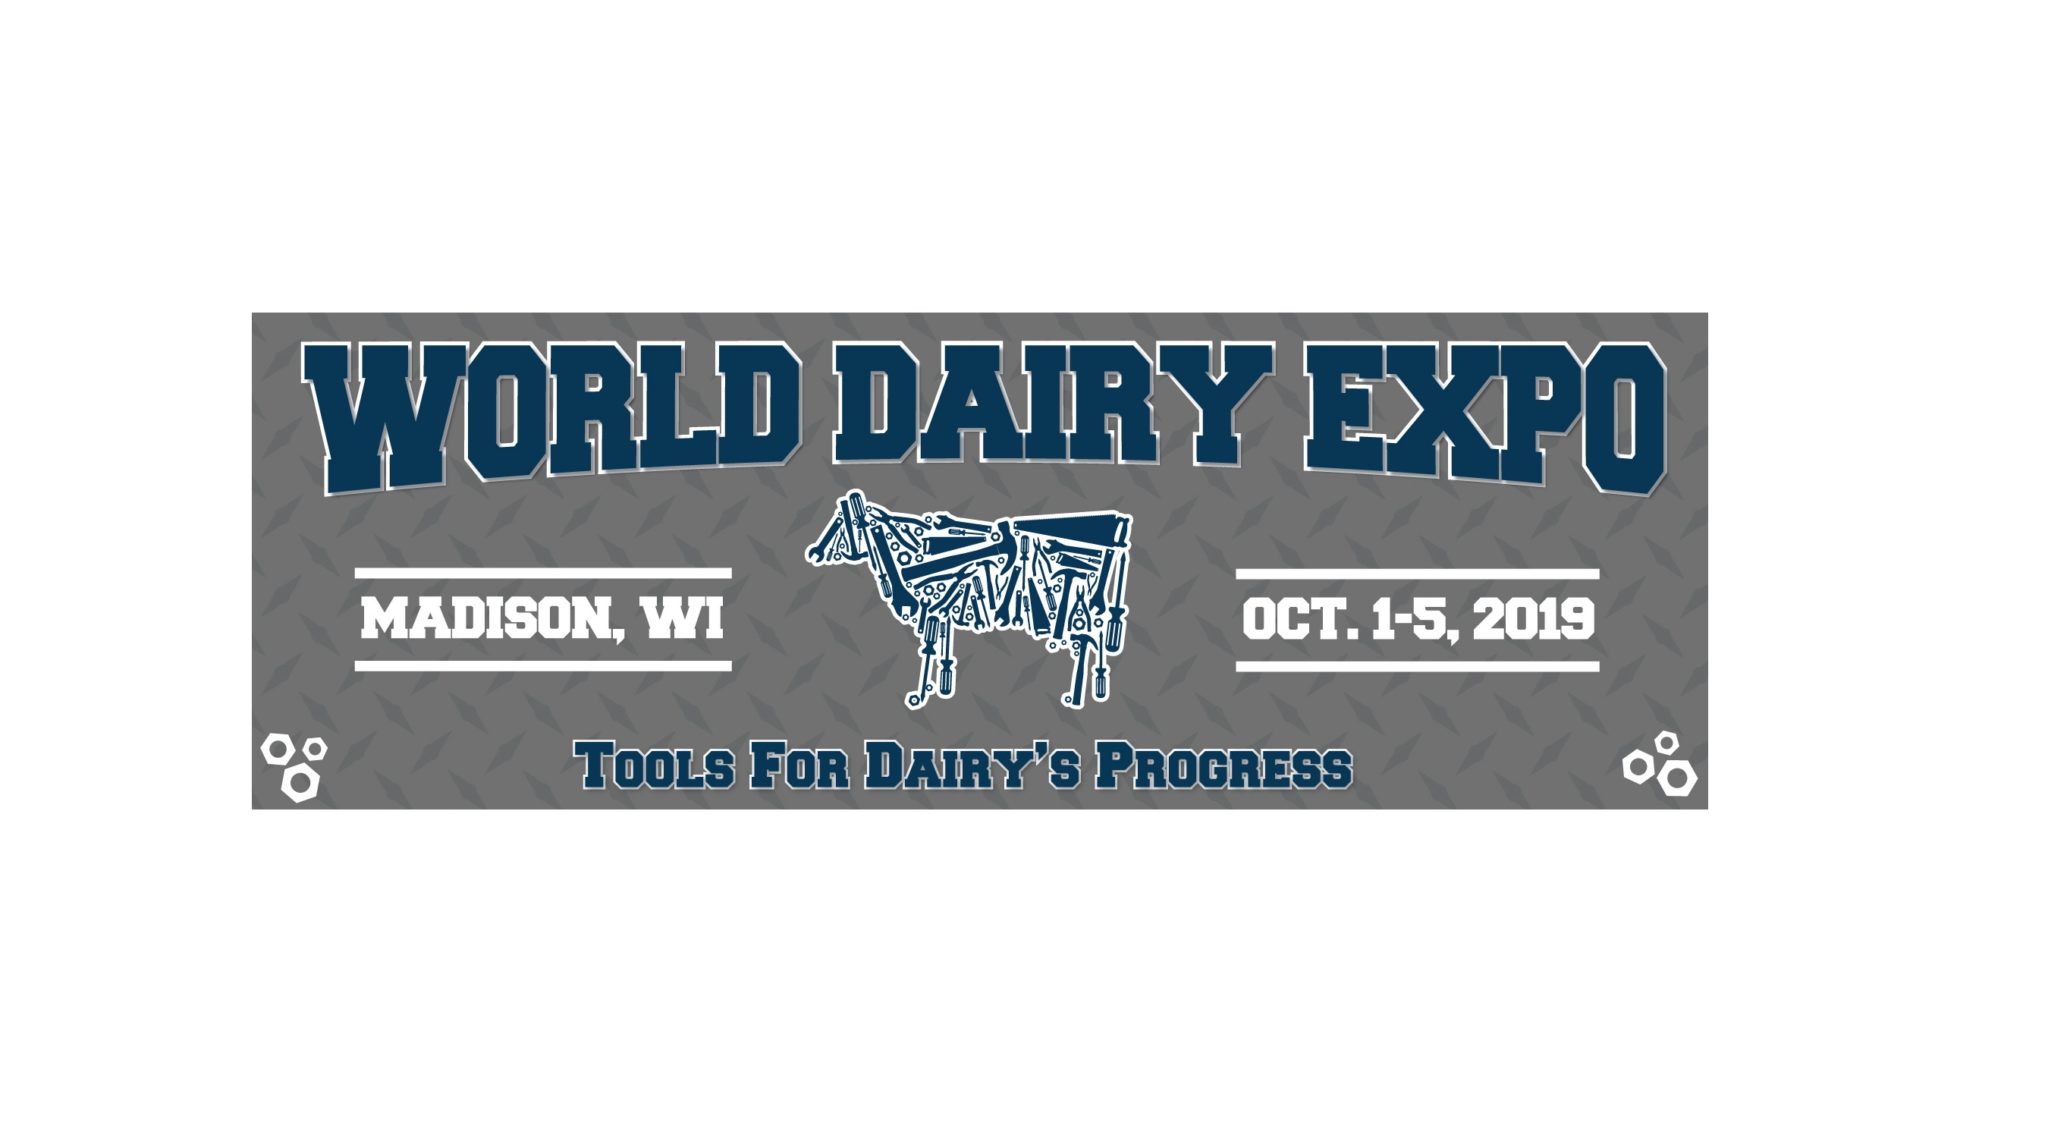 Annual World Dairy Expo Crossword